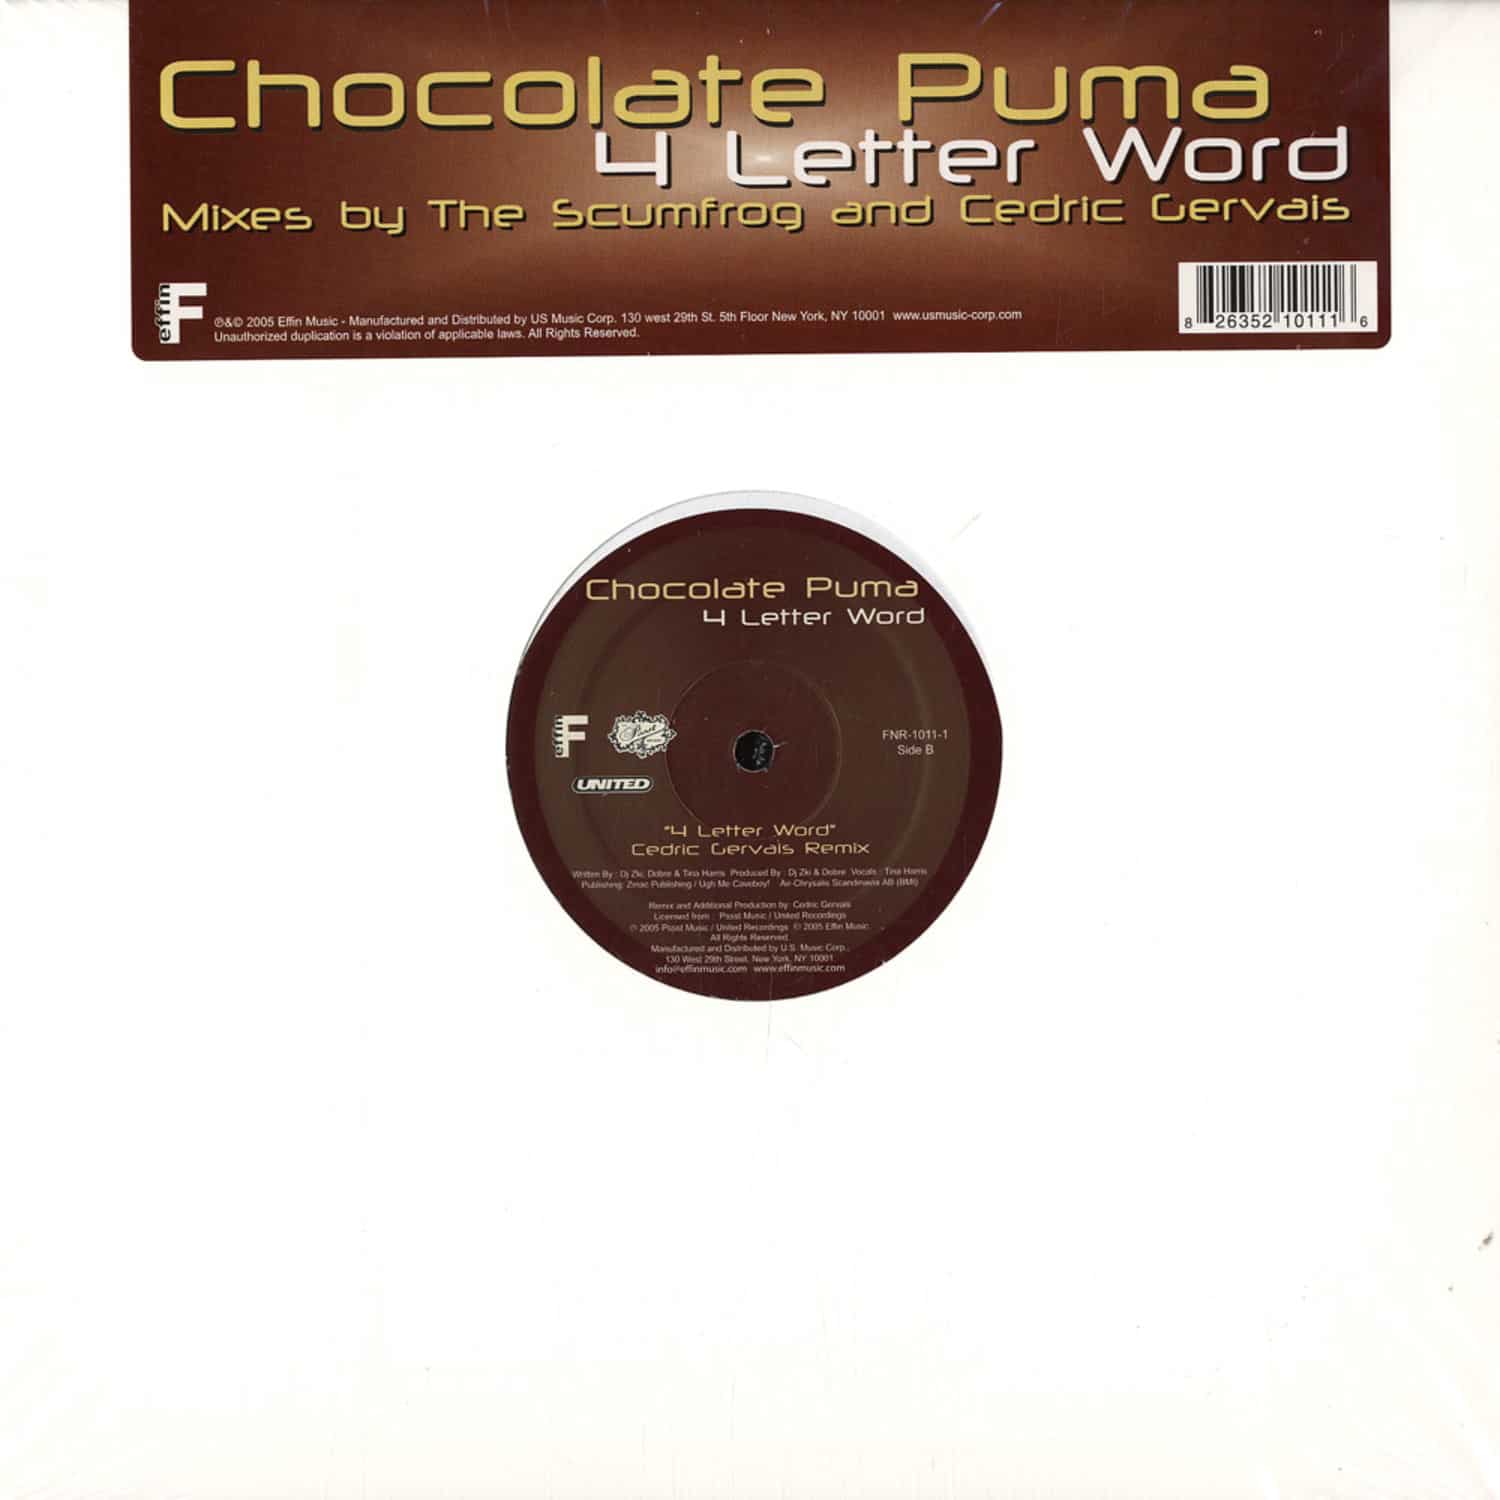 Chocolate Puma - 4 LETTER WORD